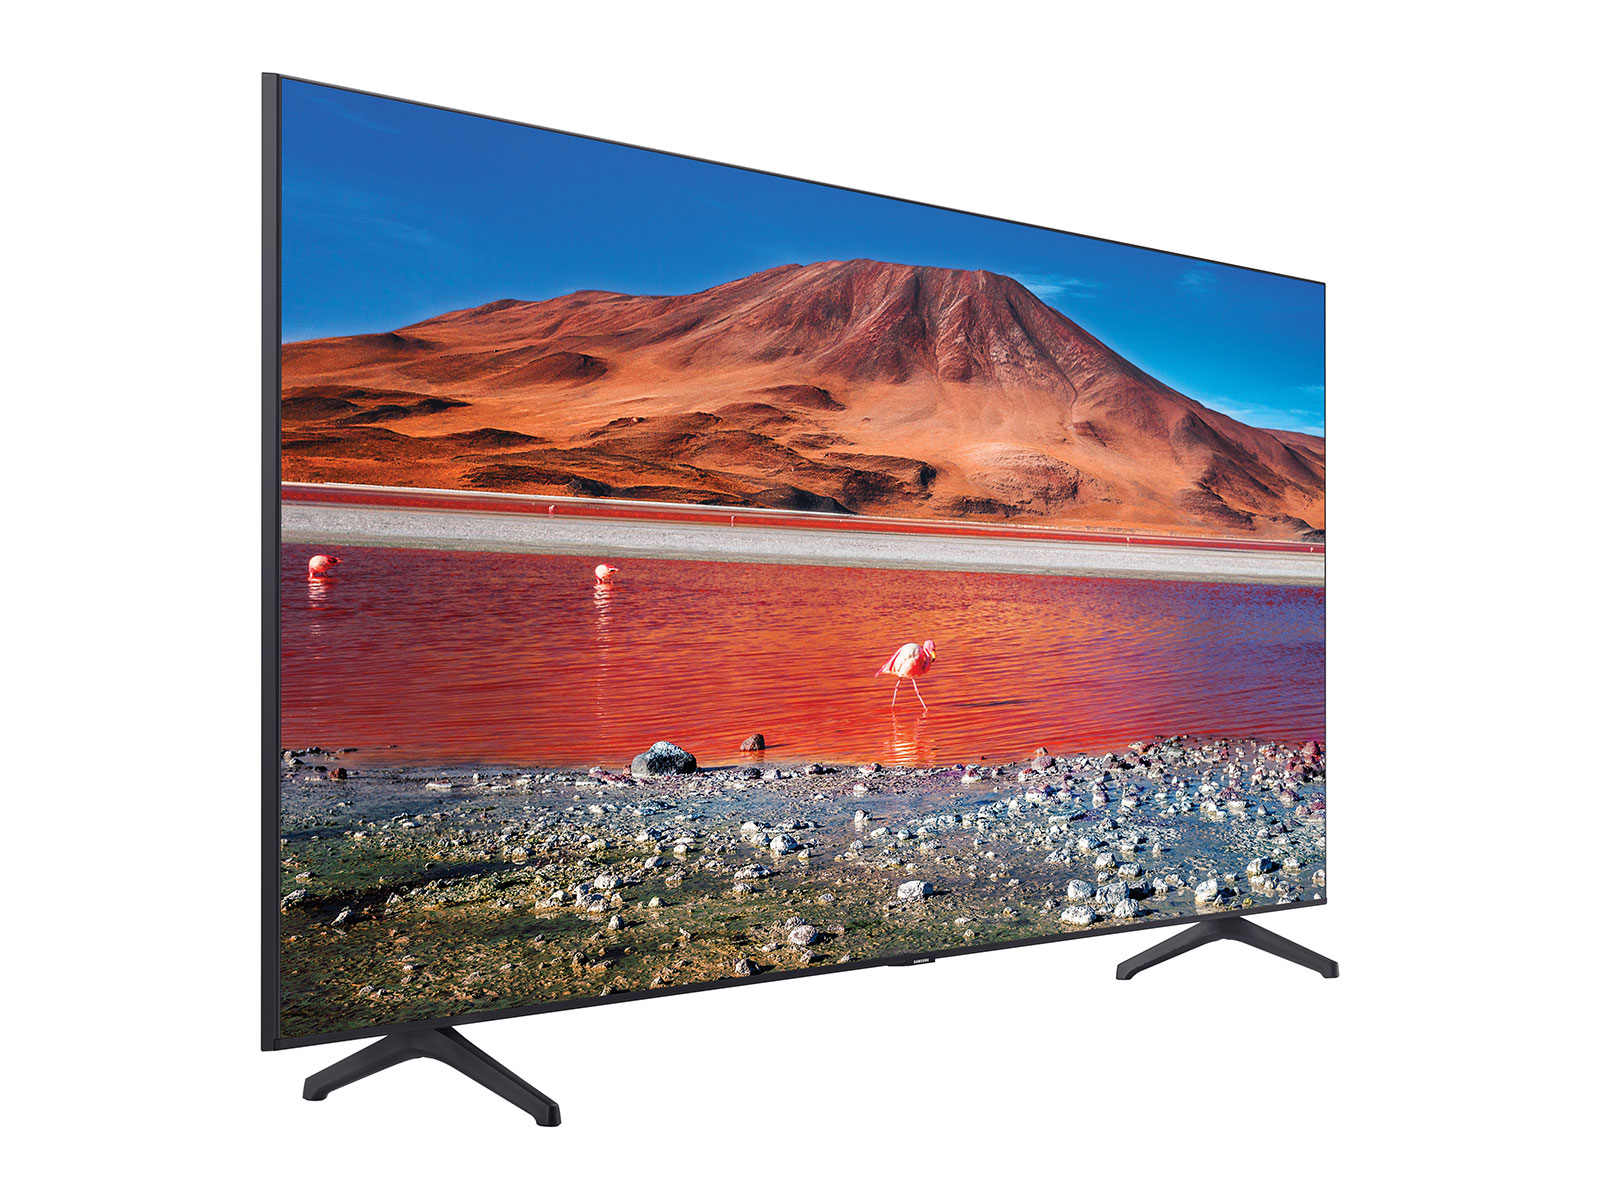 Thumbnail image of 55” Class TU700D 4K Crystal UHD HDR Smart TV (2020)